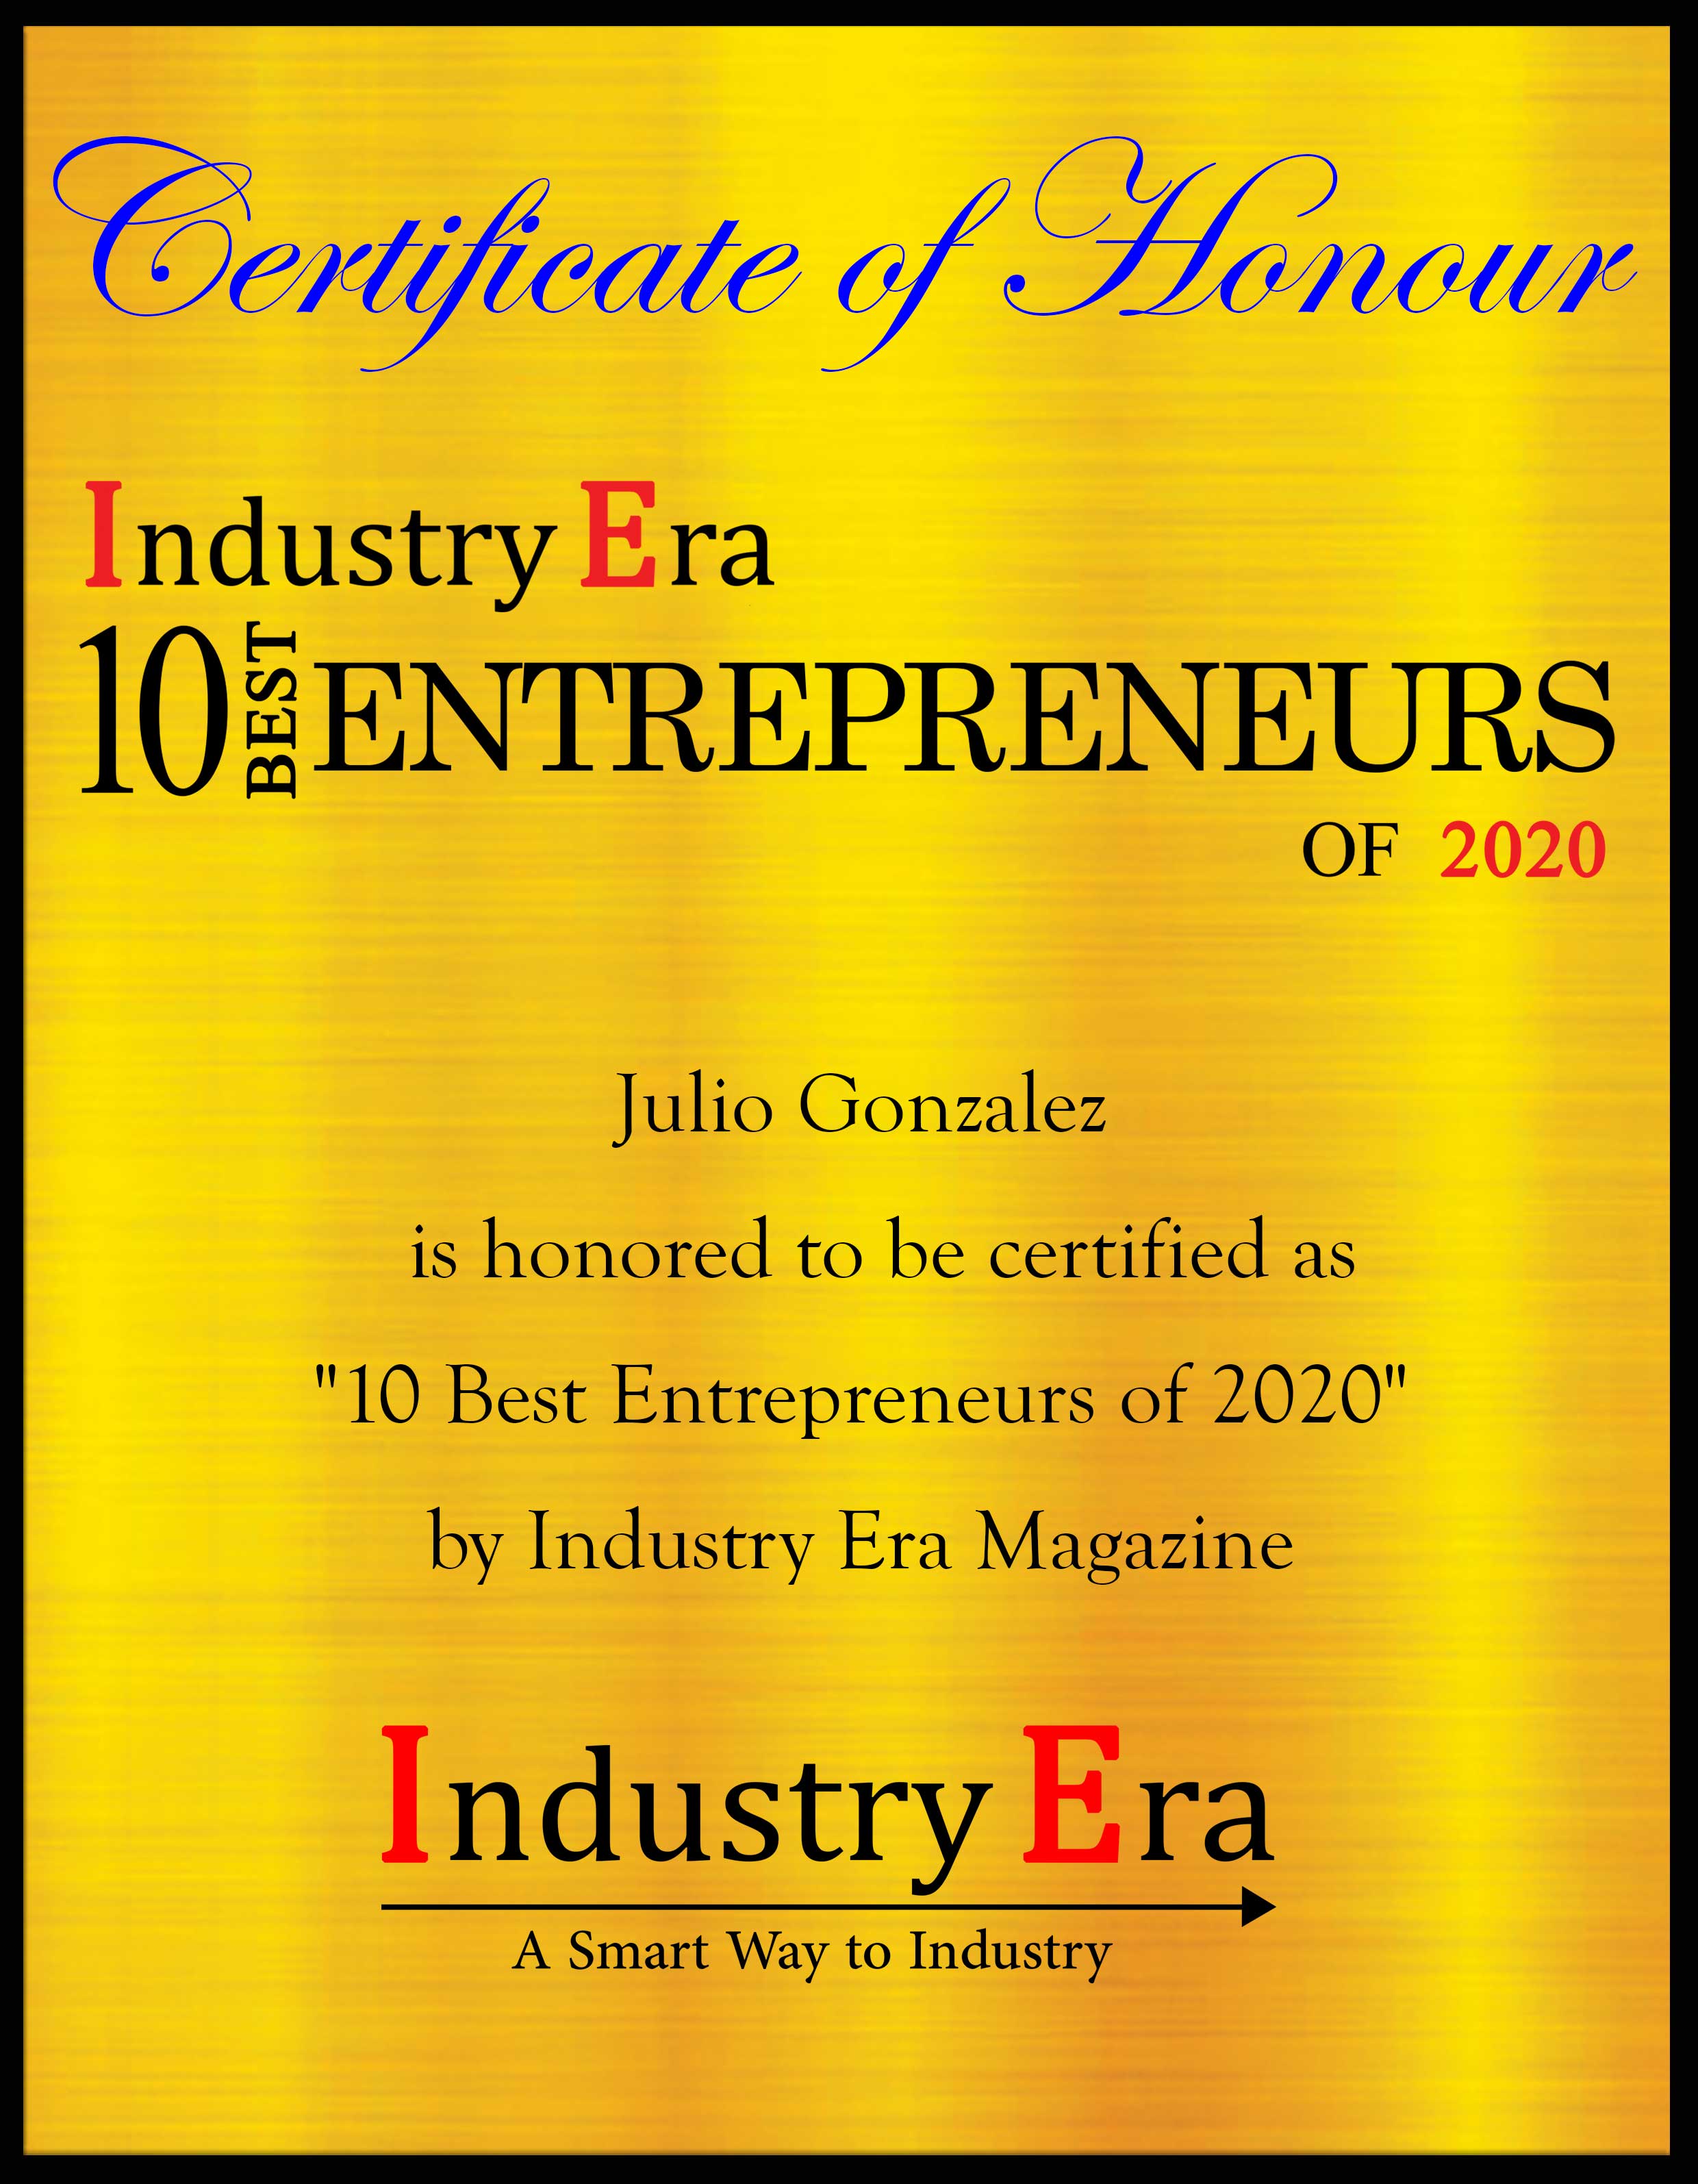 Julio Gonzalez,founder & CEO Engineered Tax Services, 10 Best Entrepreneurs of Year 2020